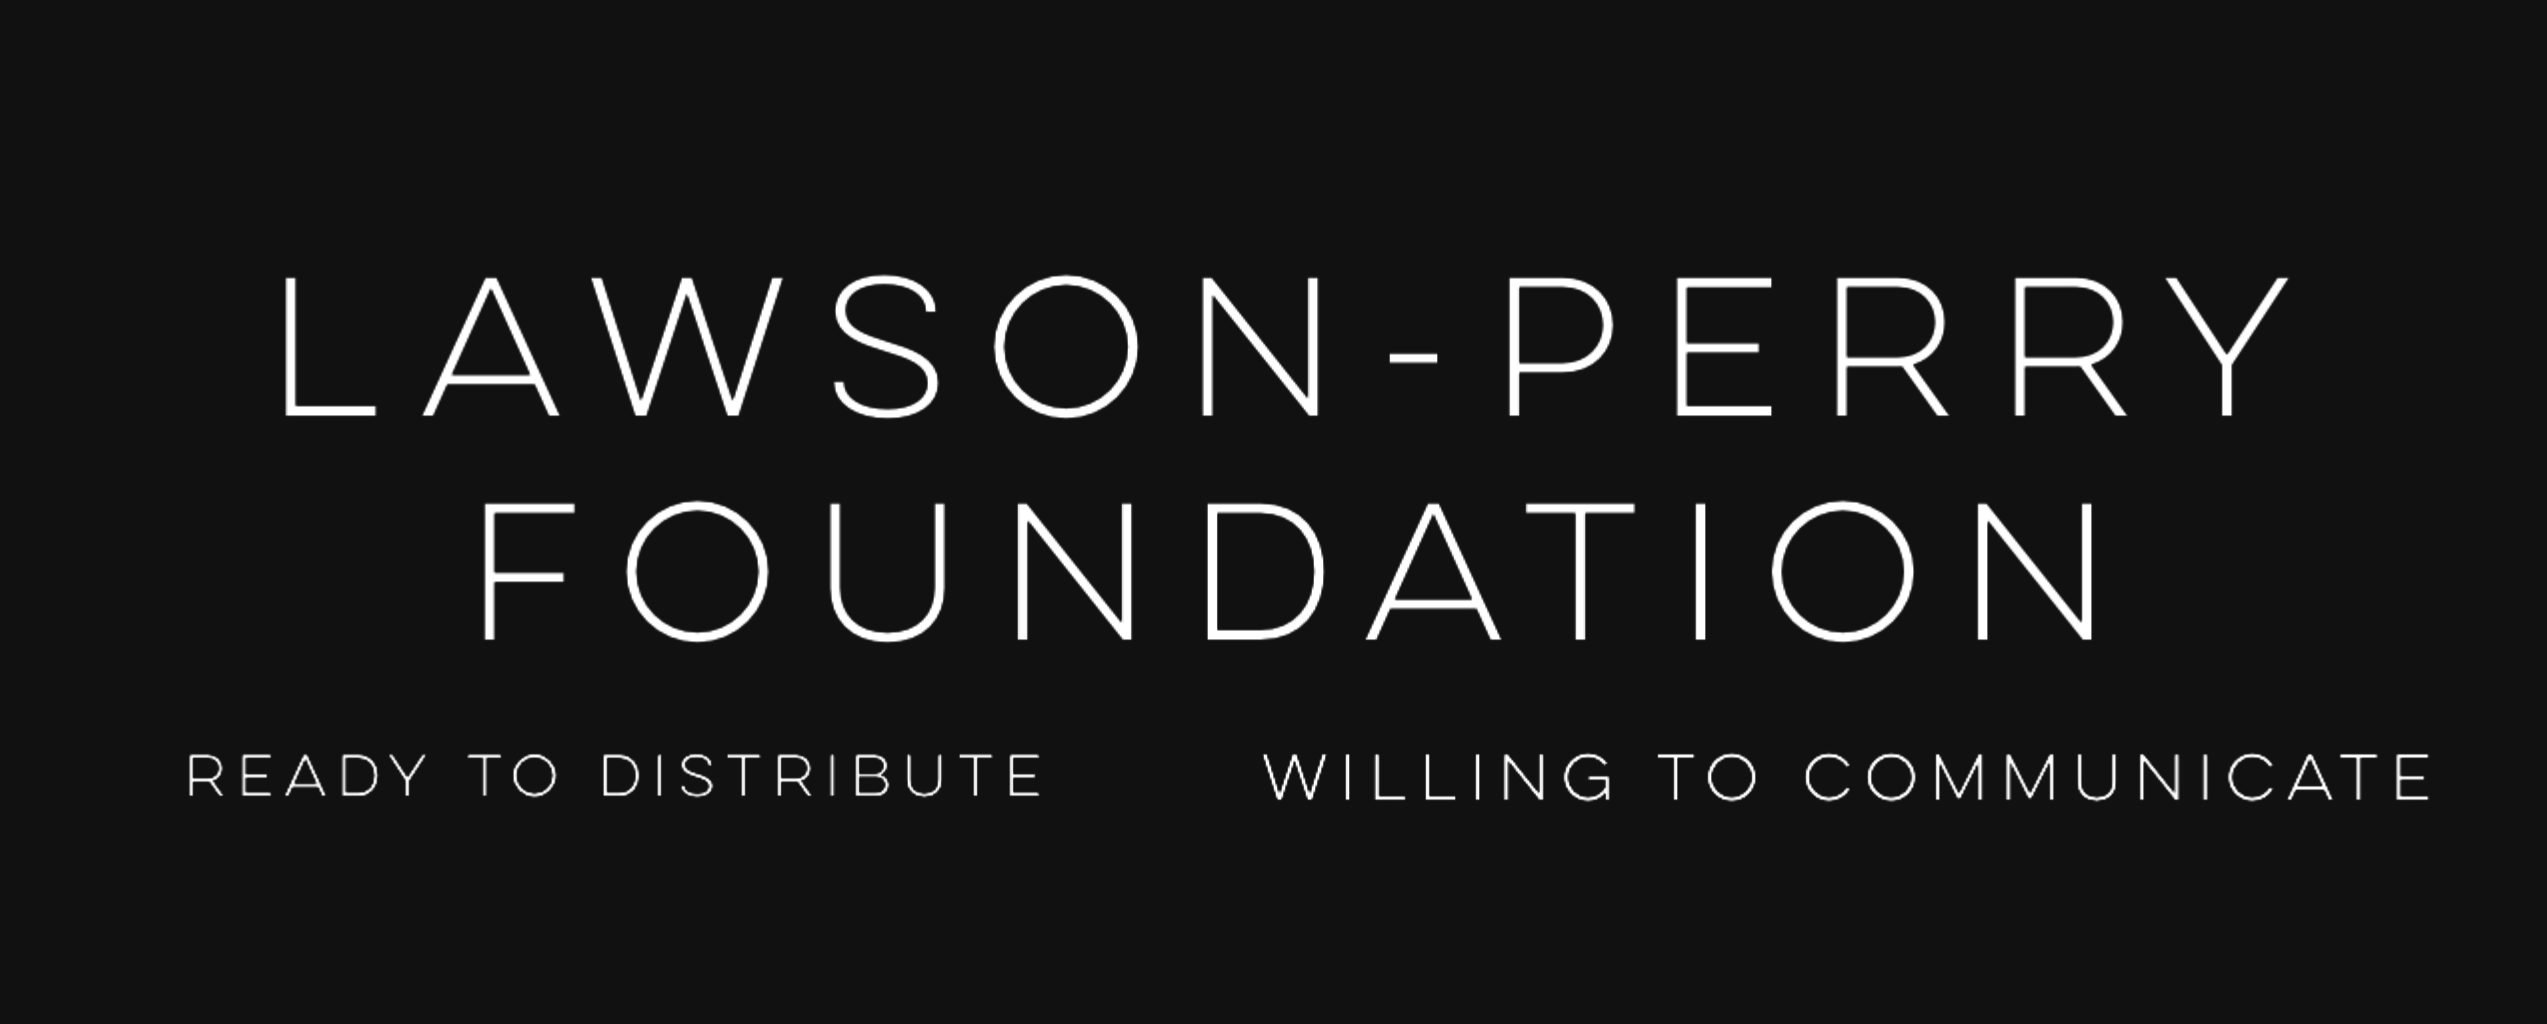 Lawson-Perry Foundation